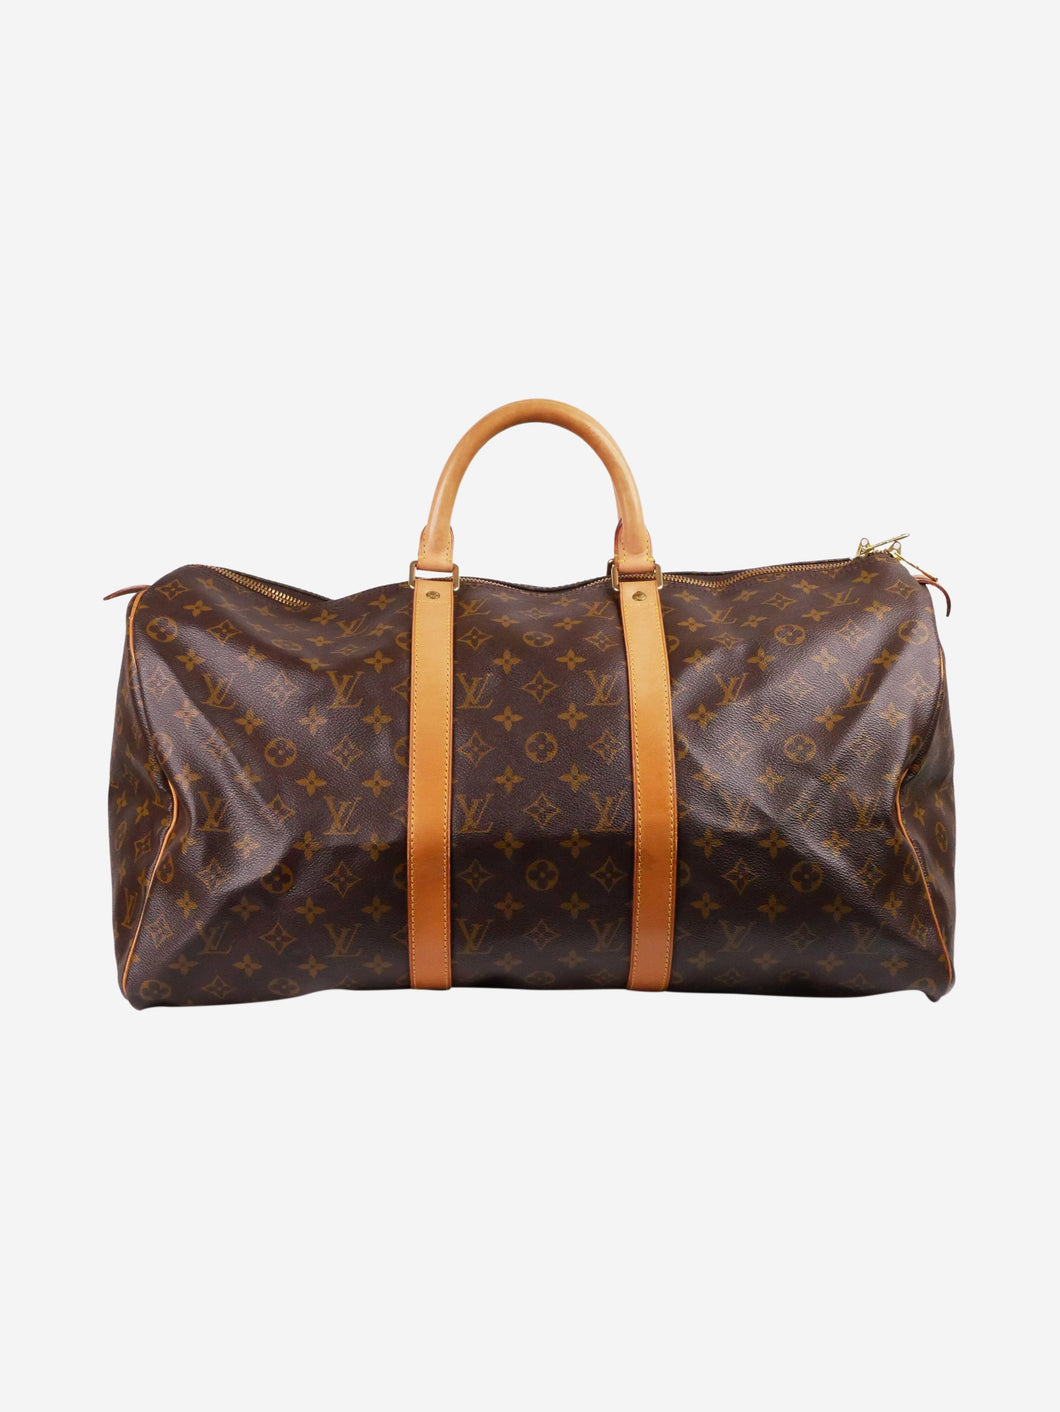 Louis Vuitton Keepall 45 Bandouliere Monogram Duffle Travel Bag